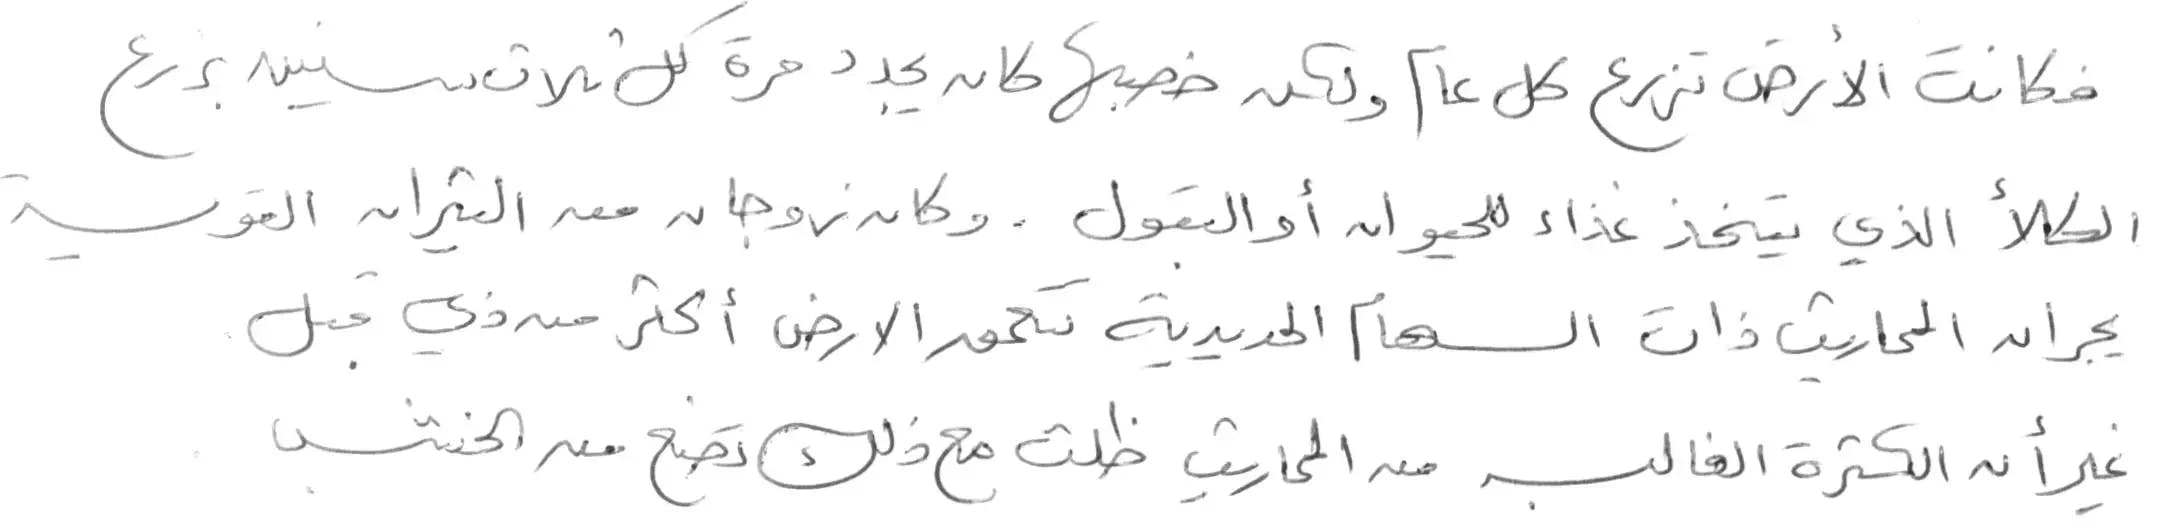 arabic-handwriting-07